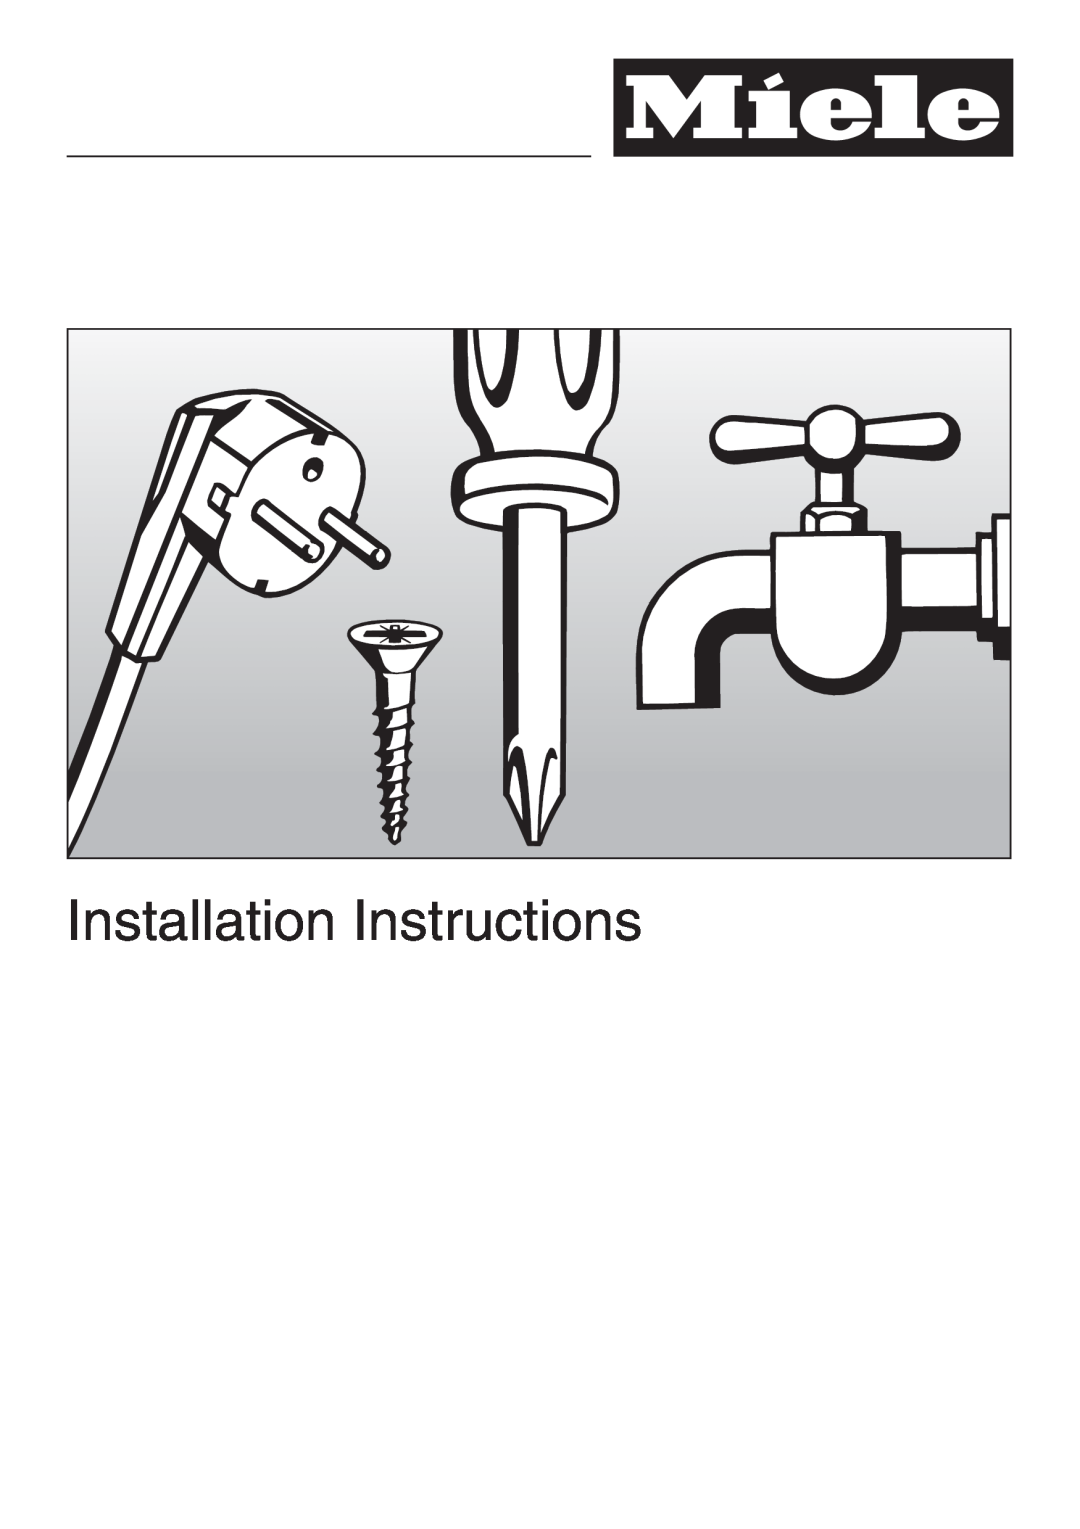 Miele DA211, DA218 installation instructions Installation Instructions 